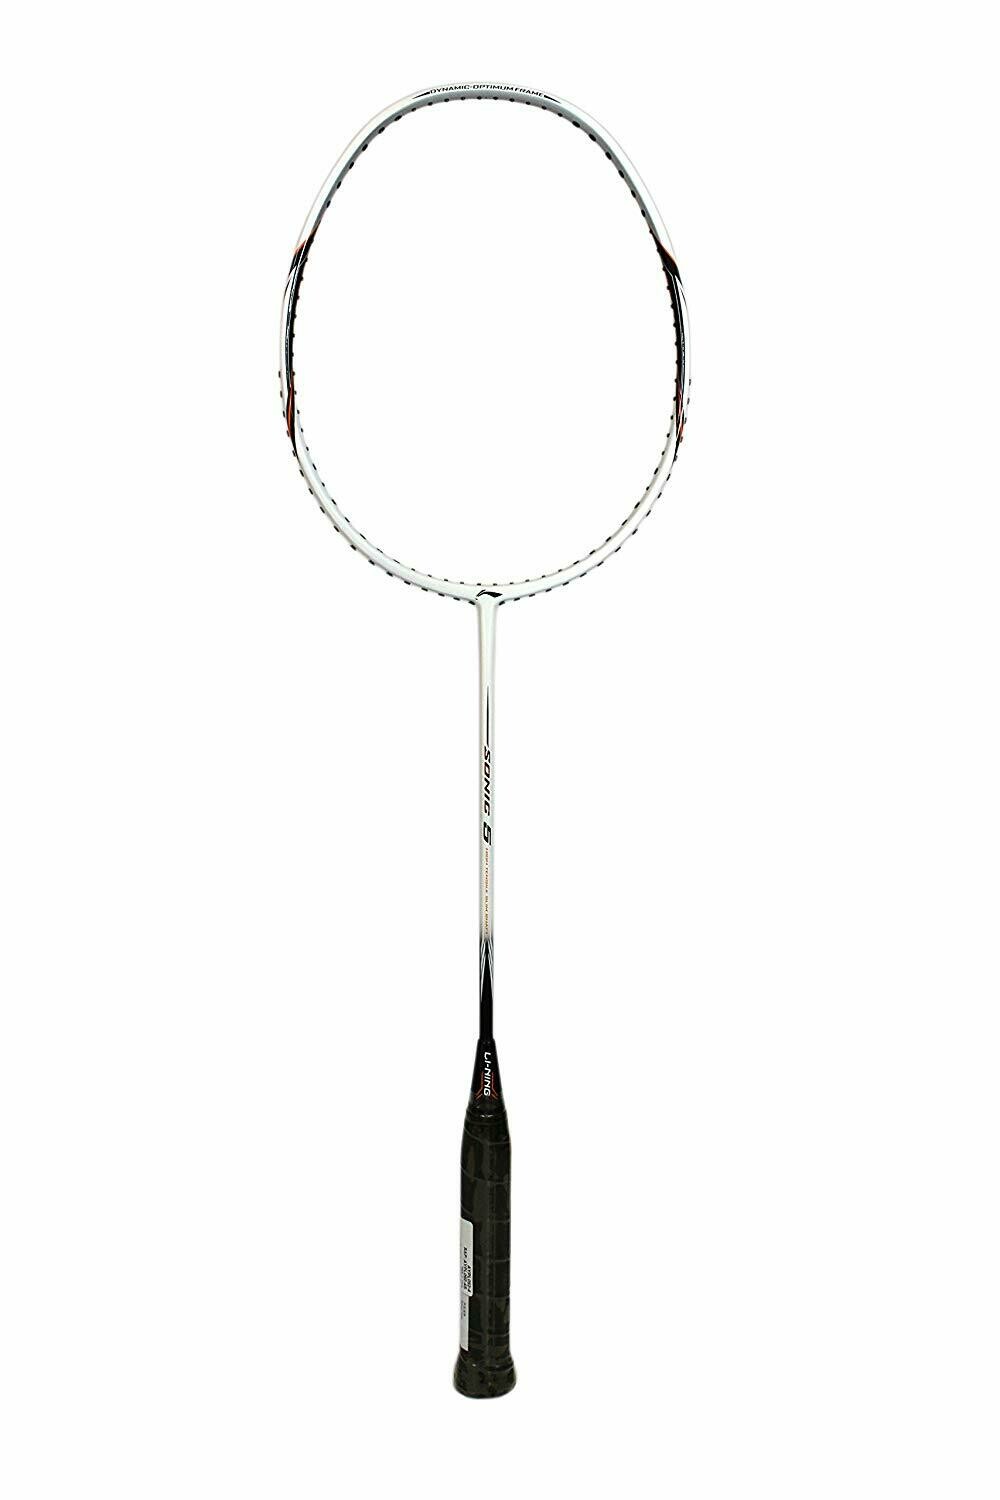 LI-NING Sonic 5 Badminton Racquet